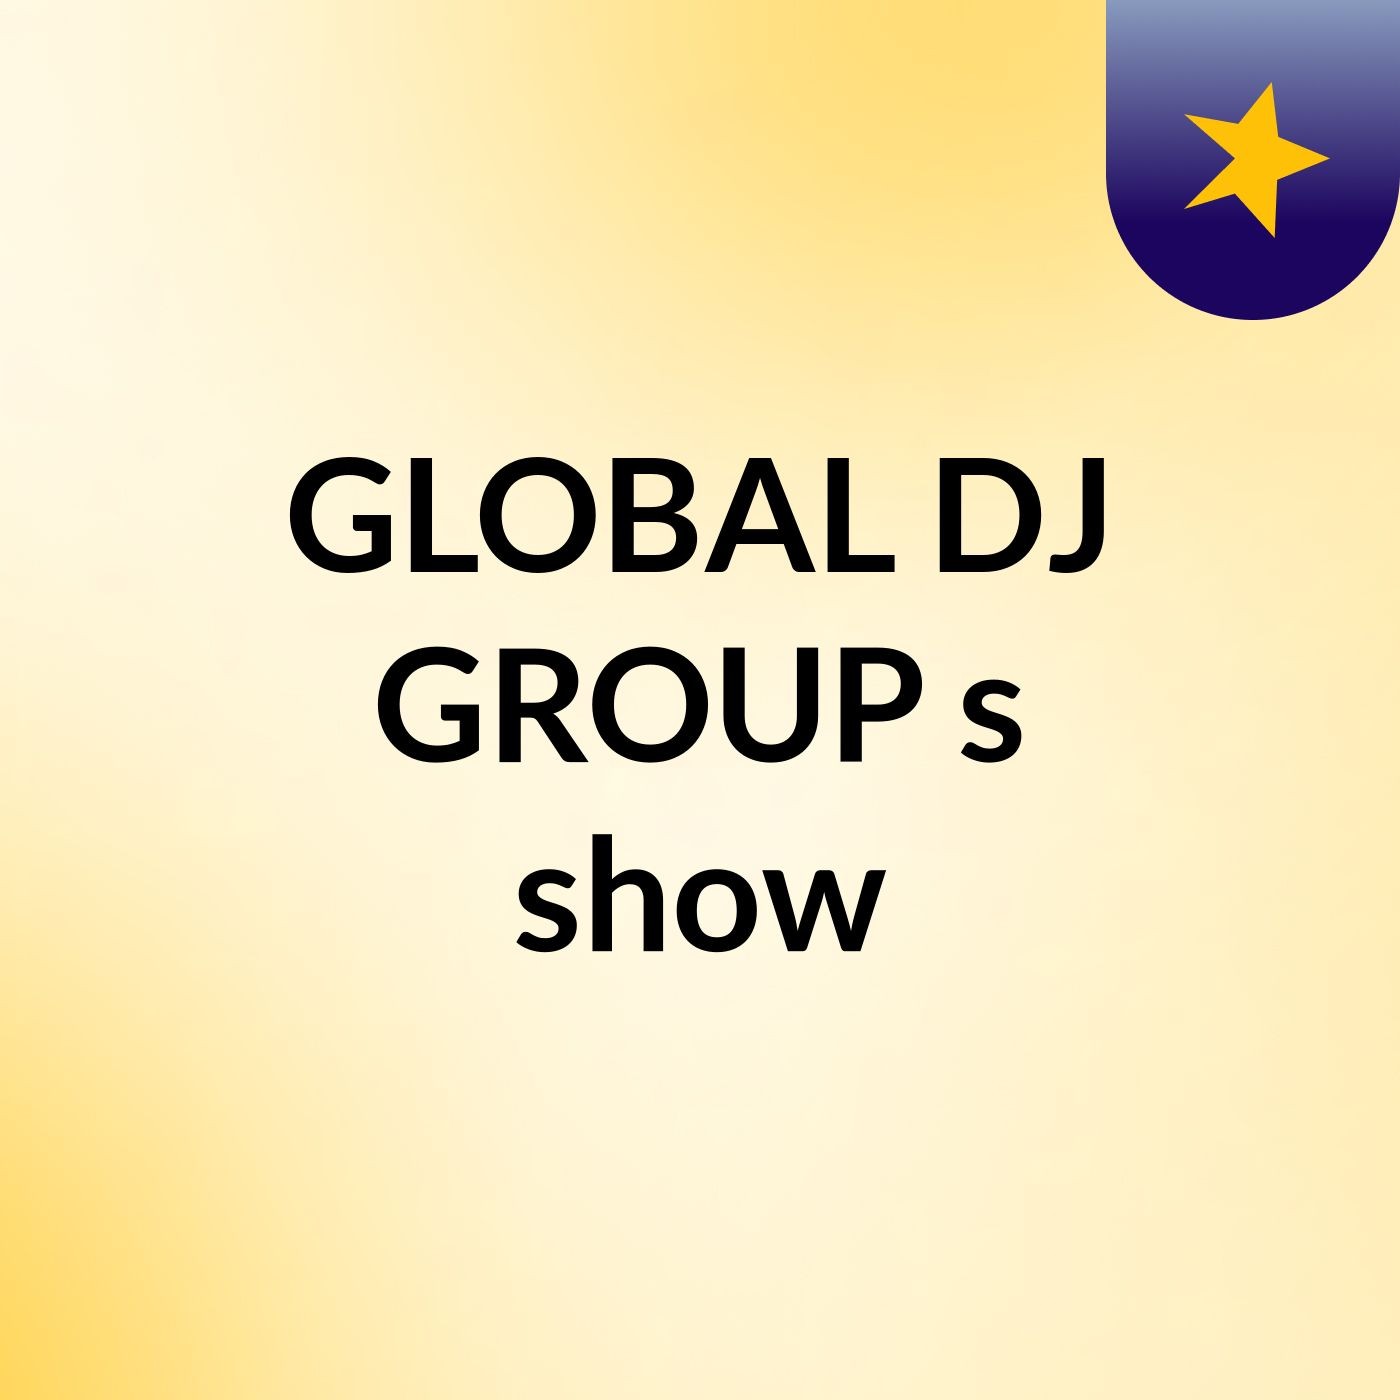 GLOBAL DJ GROUP's show